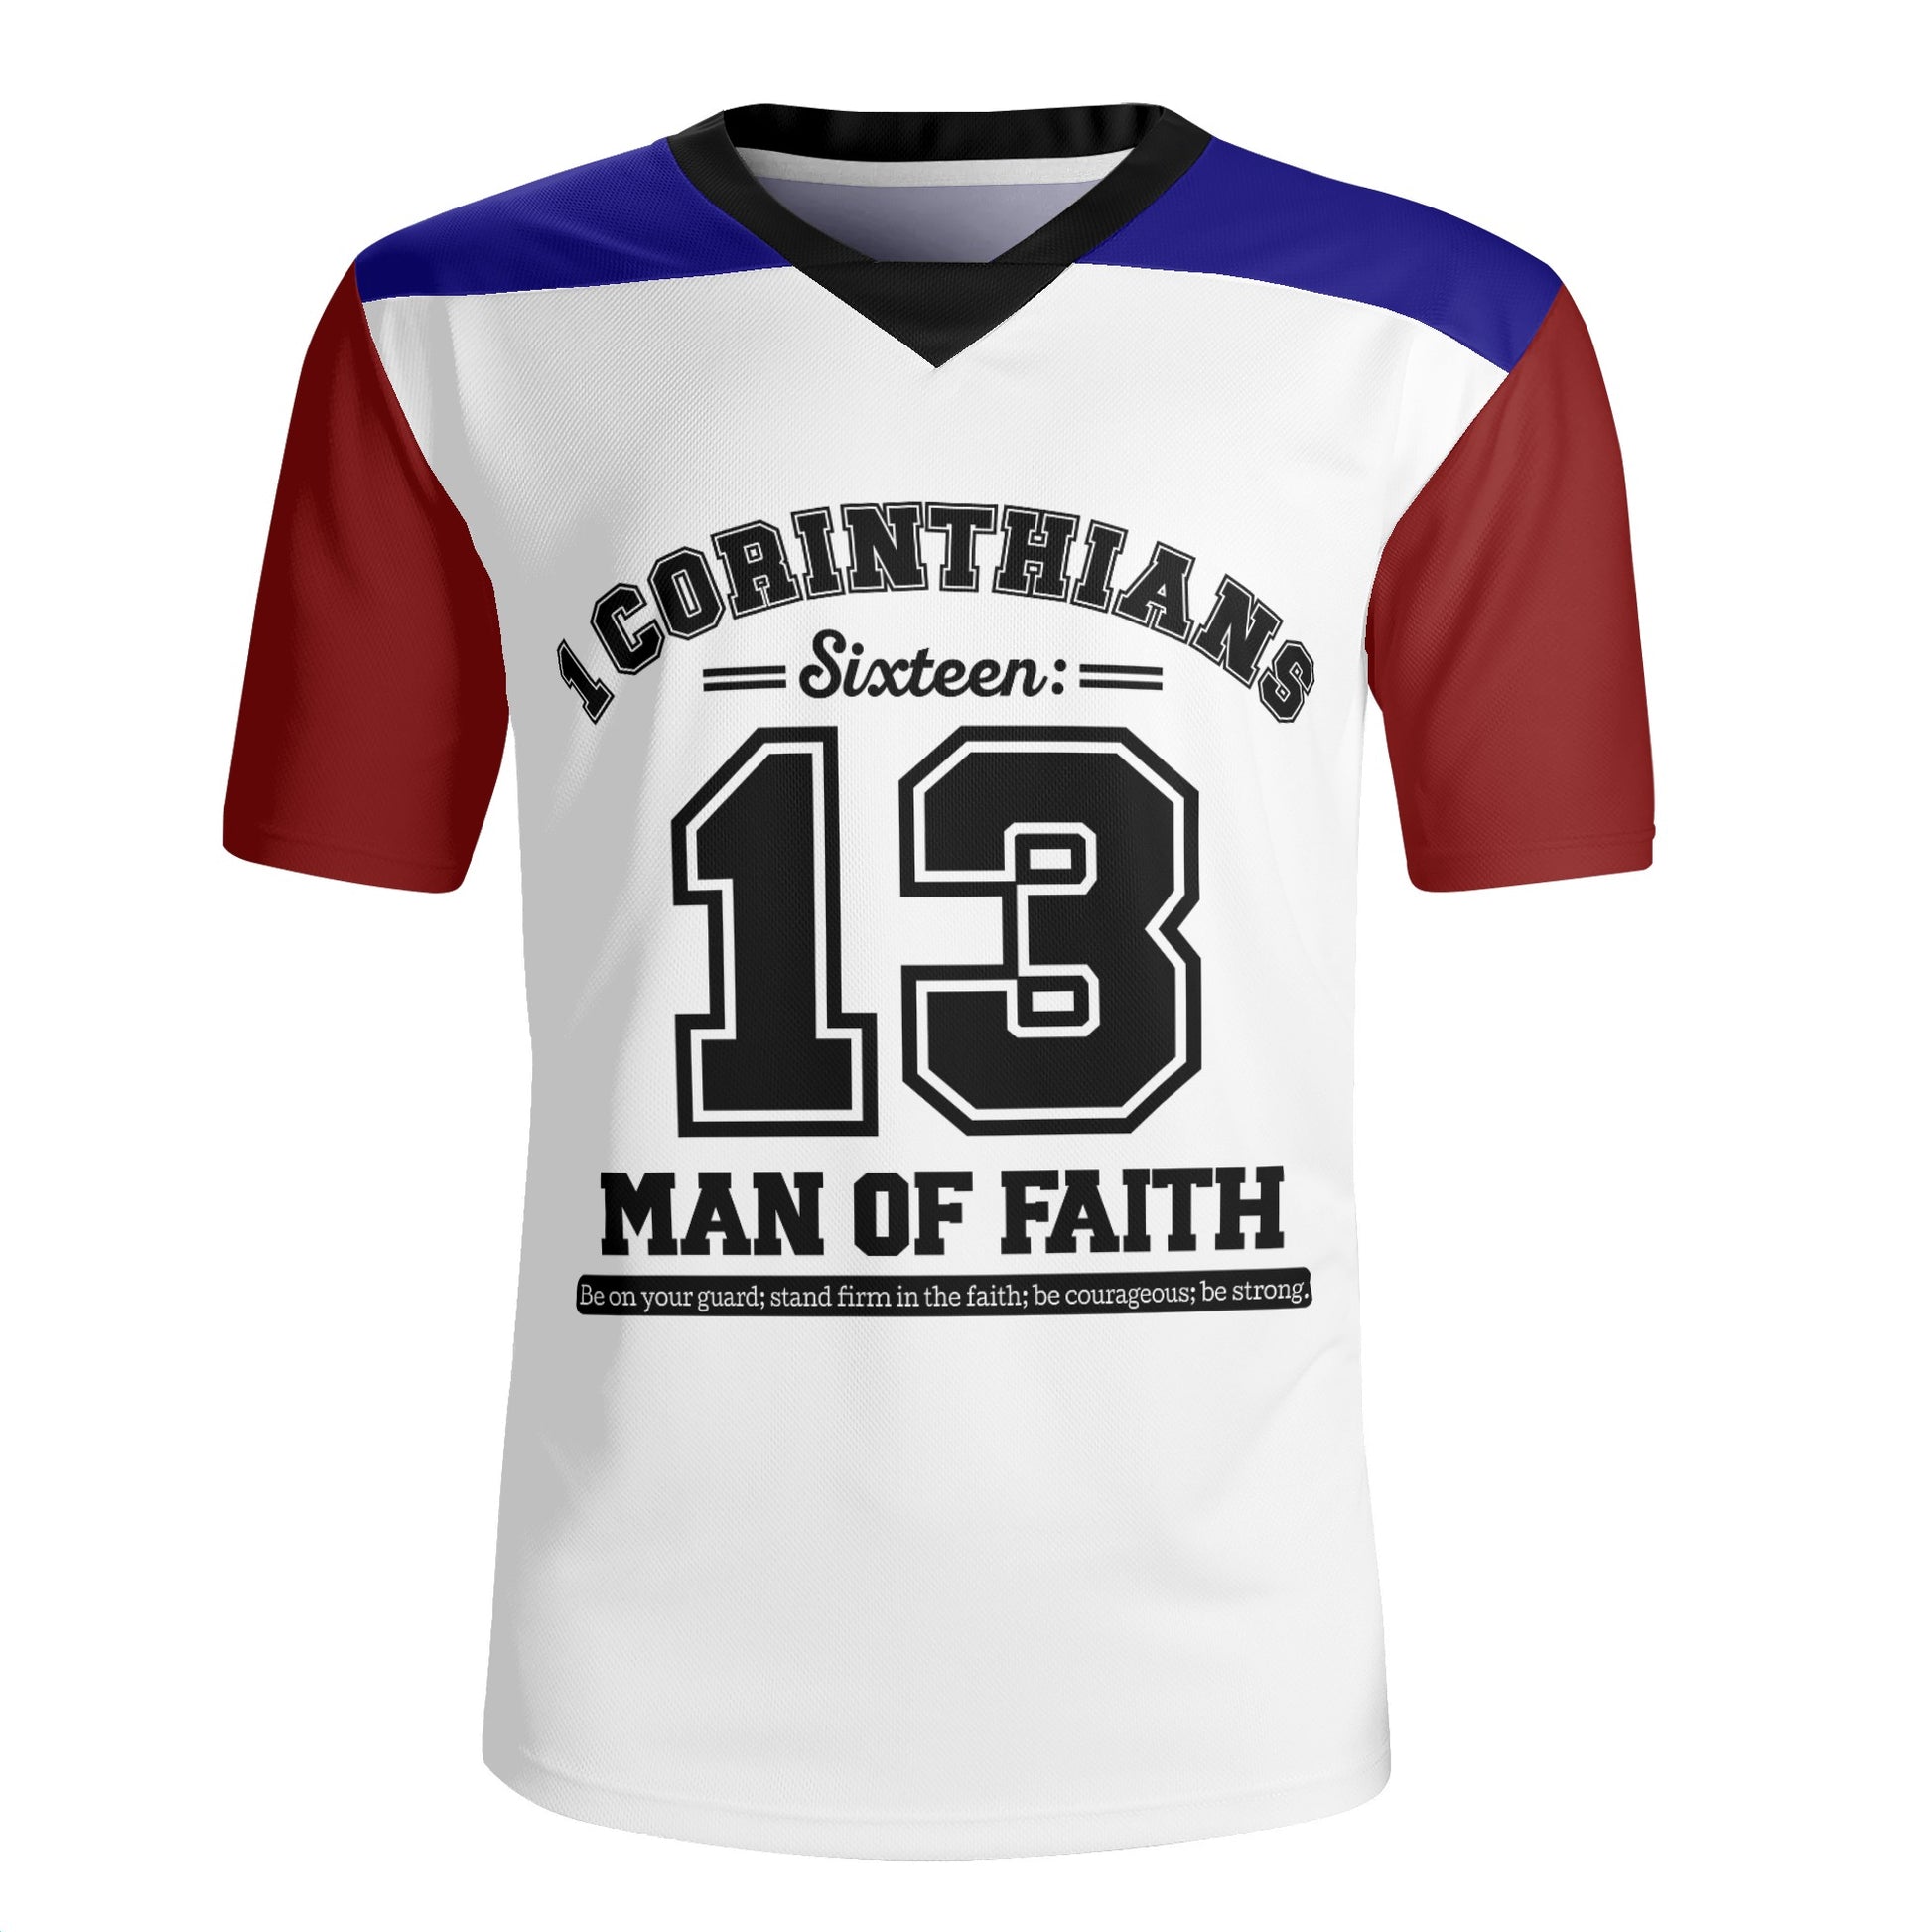 1 Corinthians Sixteen 13 Man Of Faith Mens Christian Rugby Jersey popcustoms